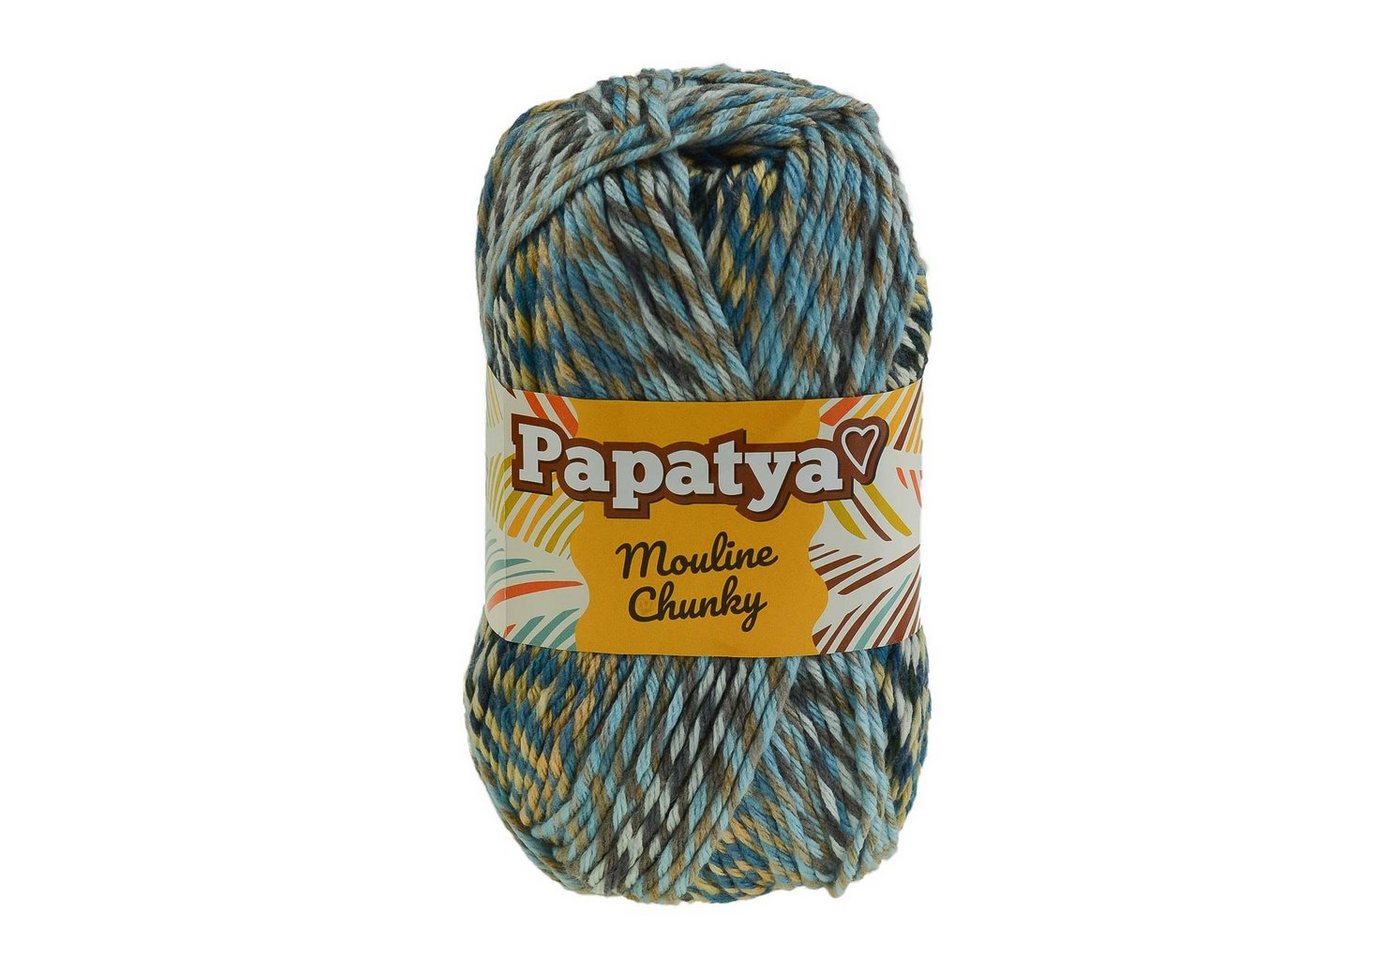 Papatya 100g Strickgarn Papatya Mouline Chunky Strickwolle mehrfarbig Effektgarn, 160 m, 2019 mehrfarbig von Papatya